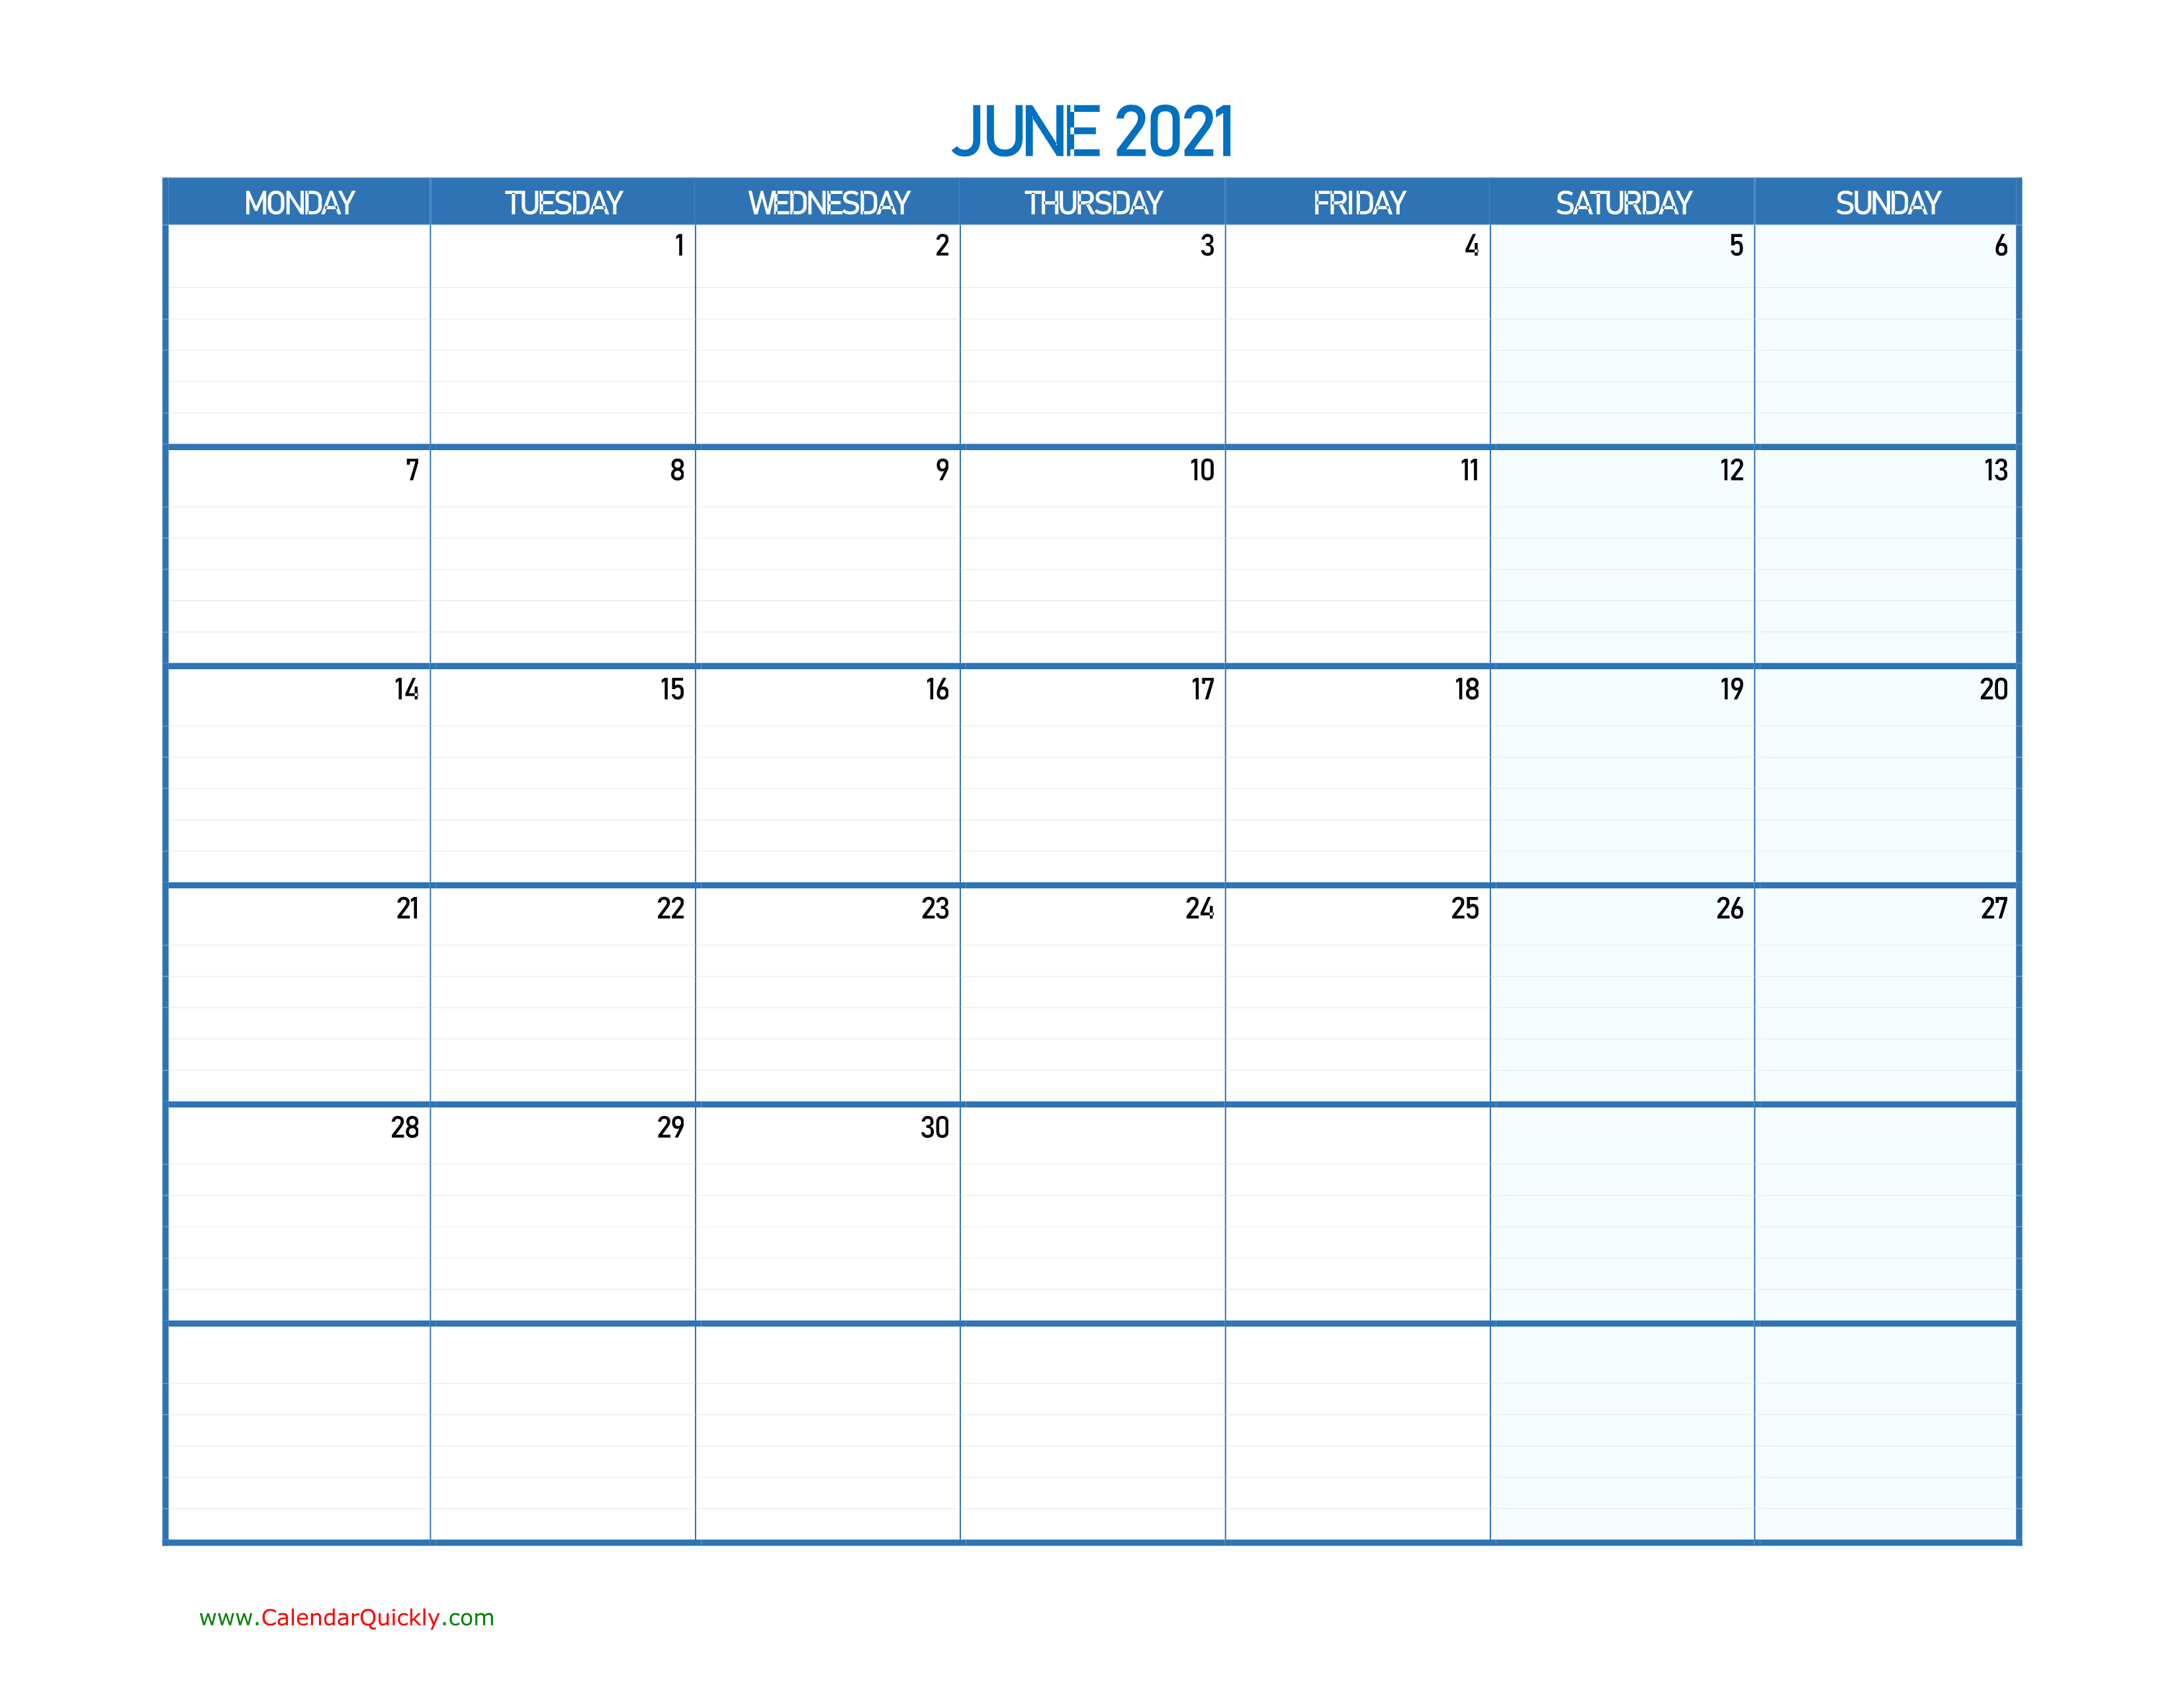 June Monday 2021 Blank Calendar | Calendar Quickly